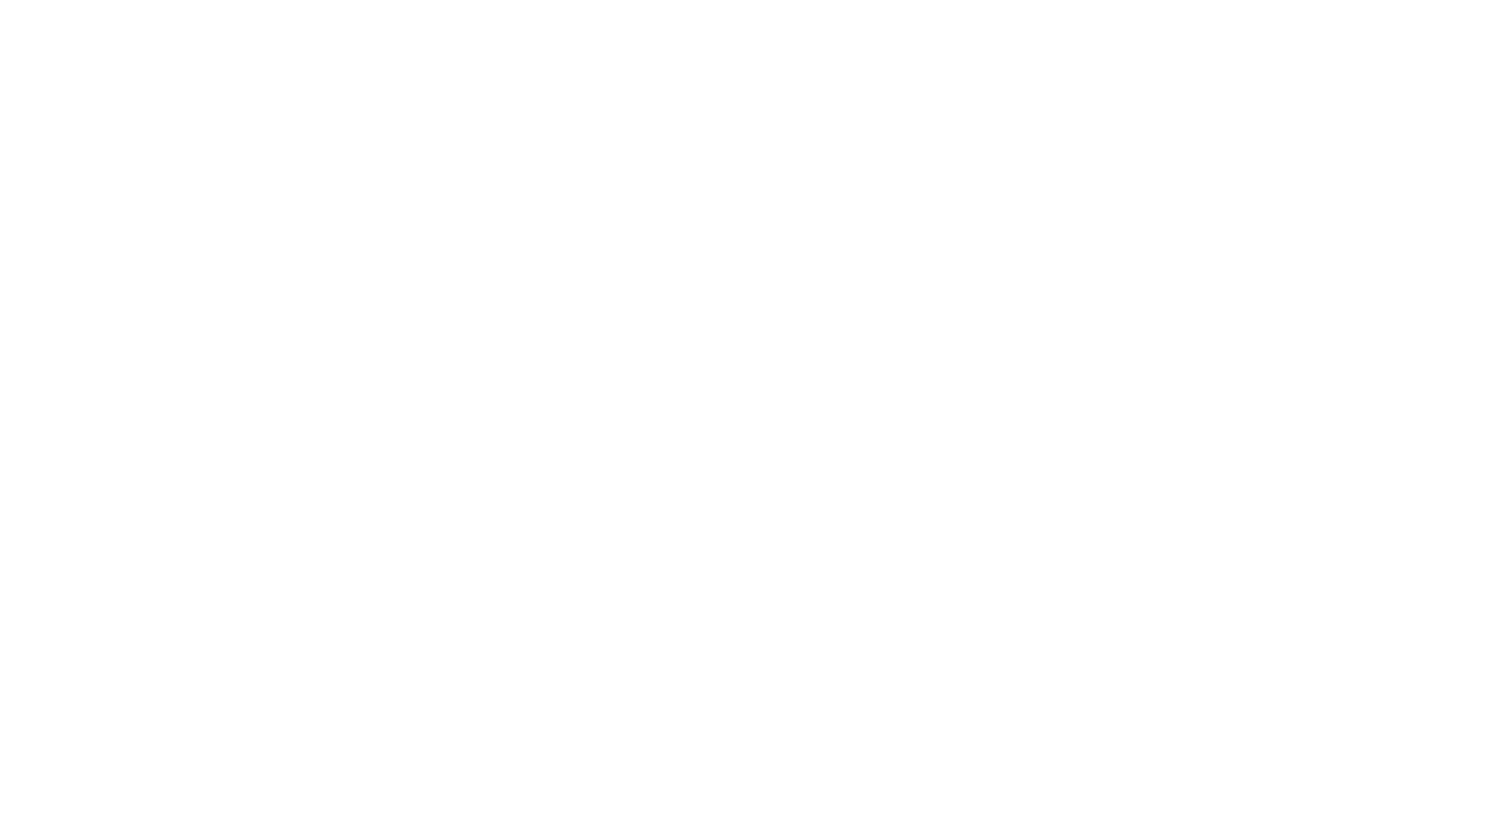 care leaver covenant